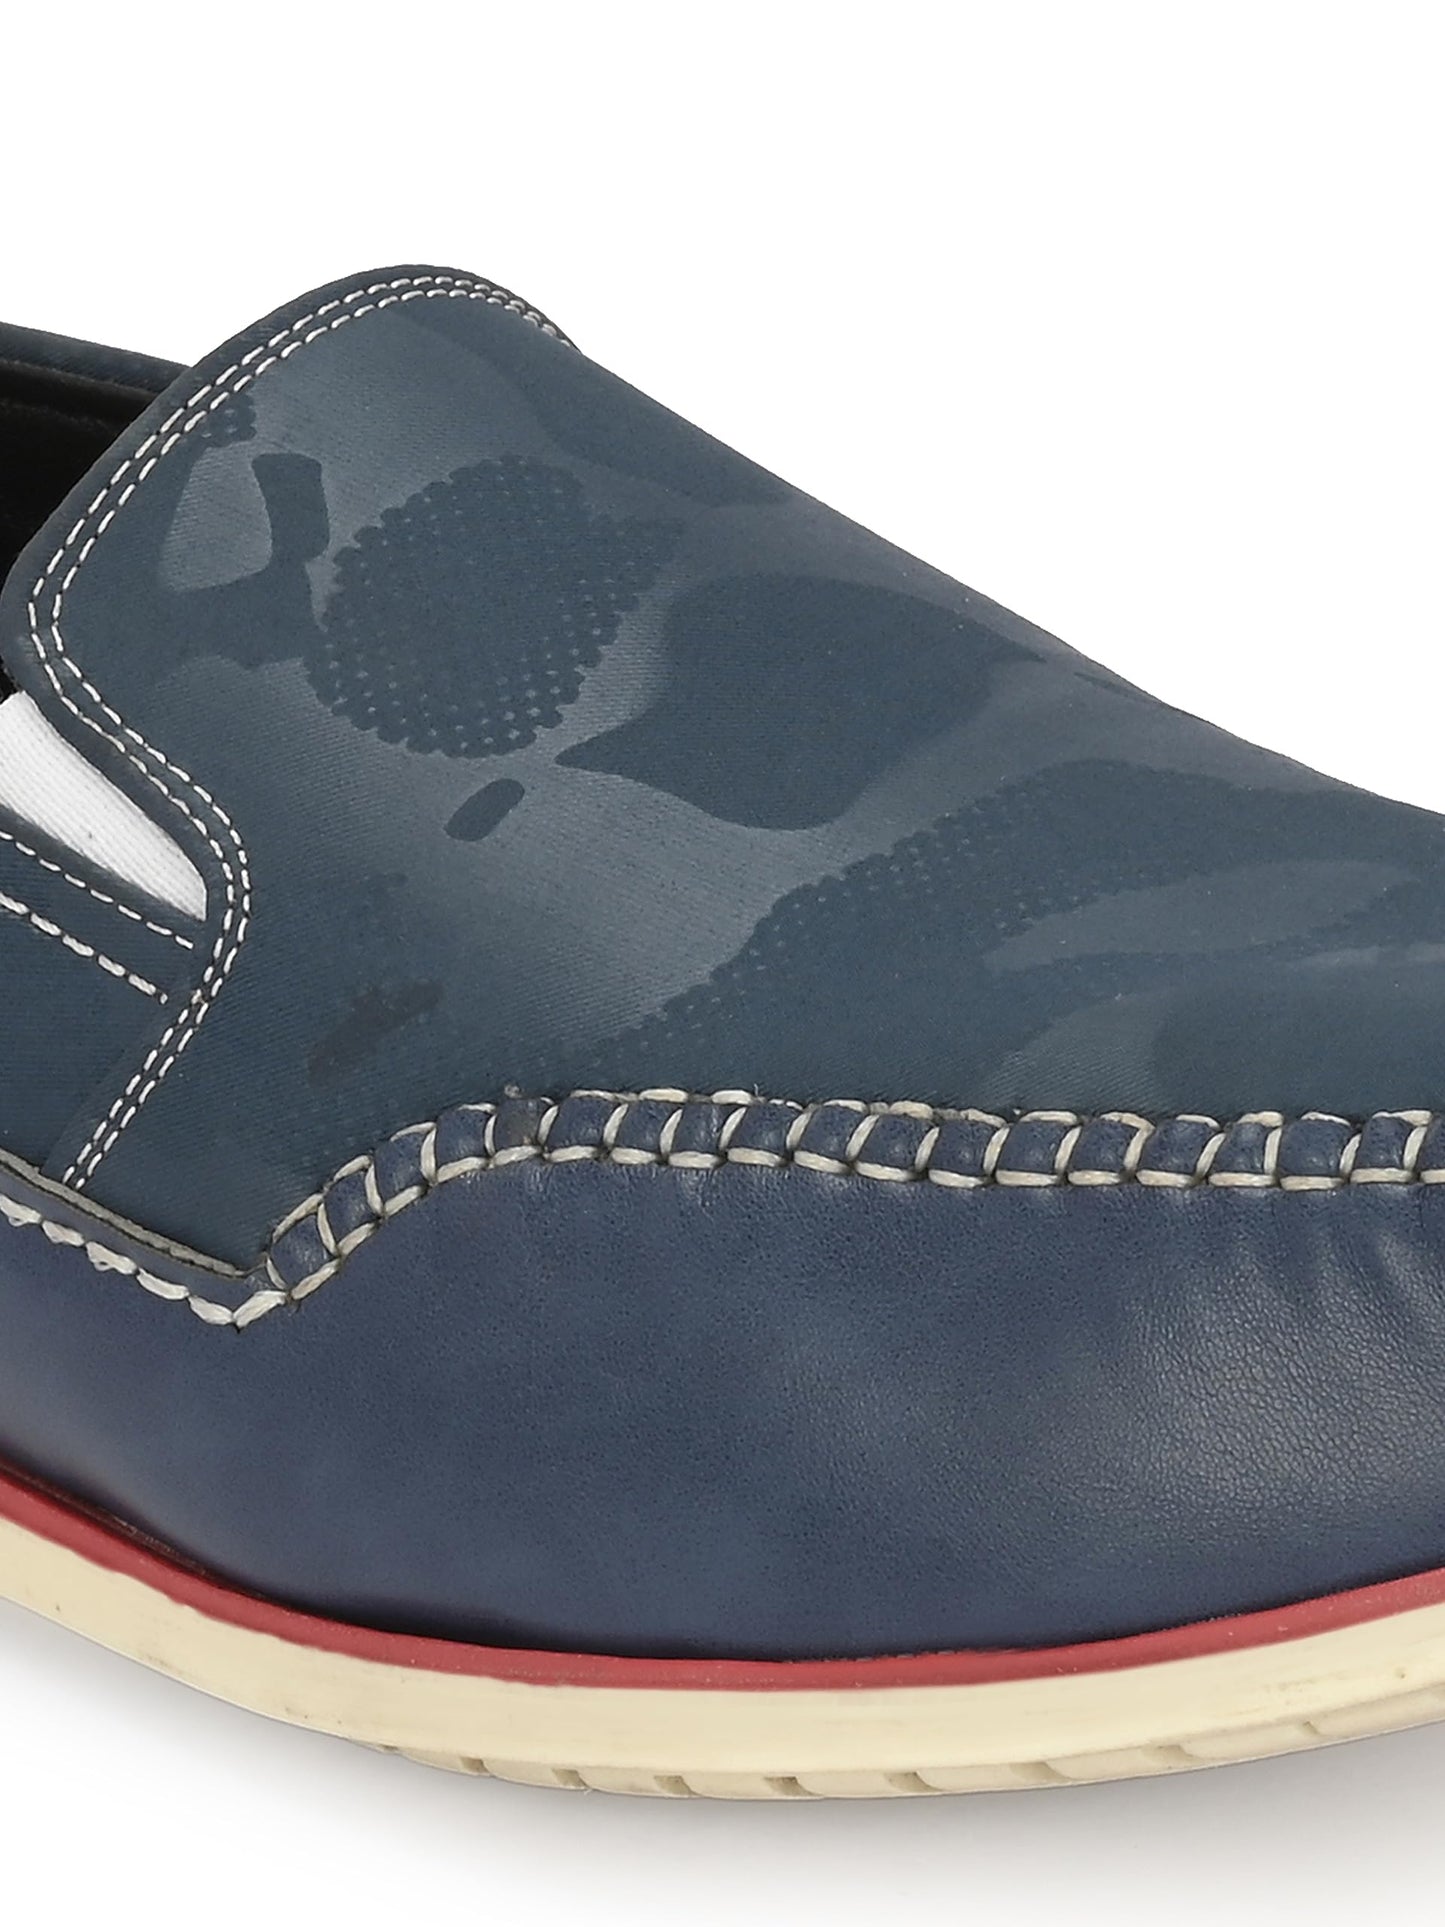 HITZ Men's Blue Leather Moccasins Boat Shoes - 6